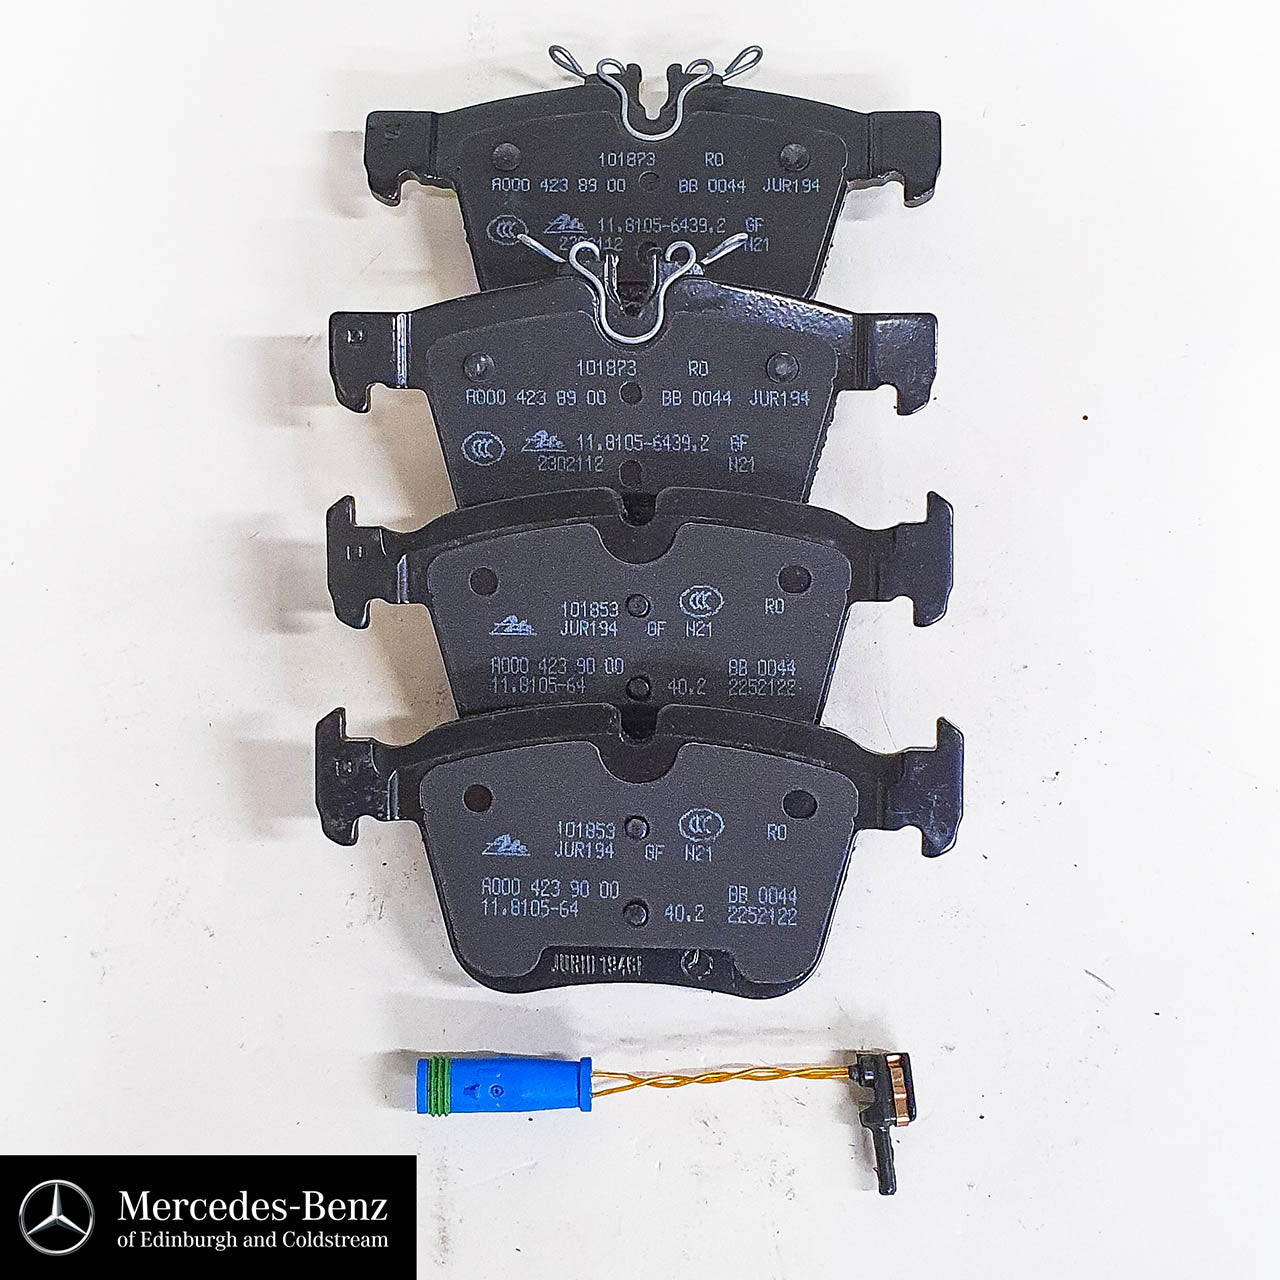 Genuine Mercedes-Benz Rear Brake Pads and sensor for GLC, C Class 205, 206